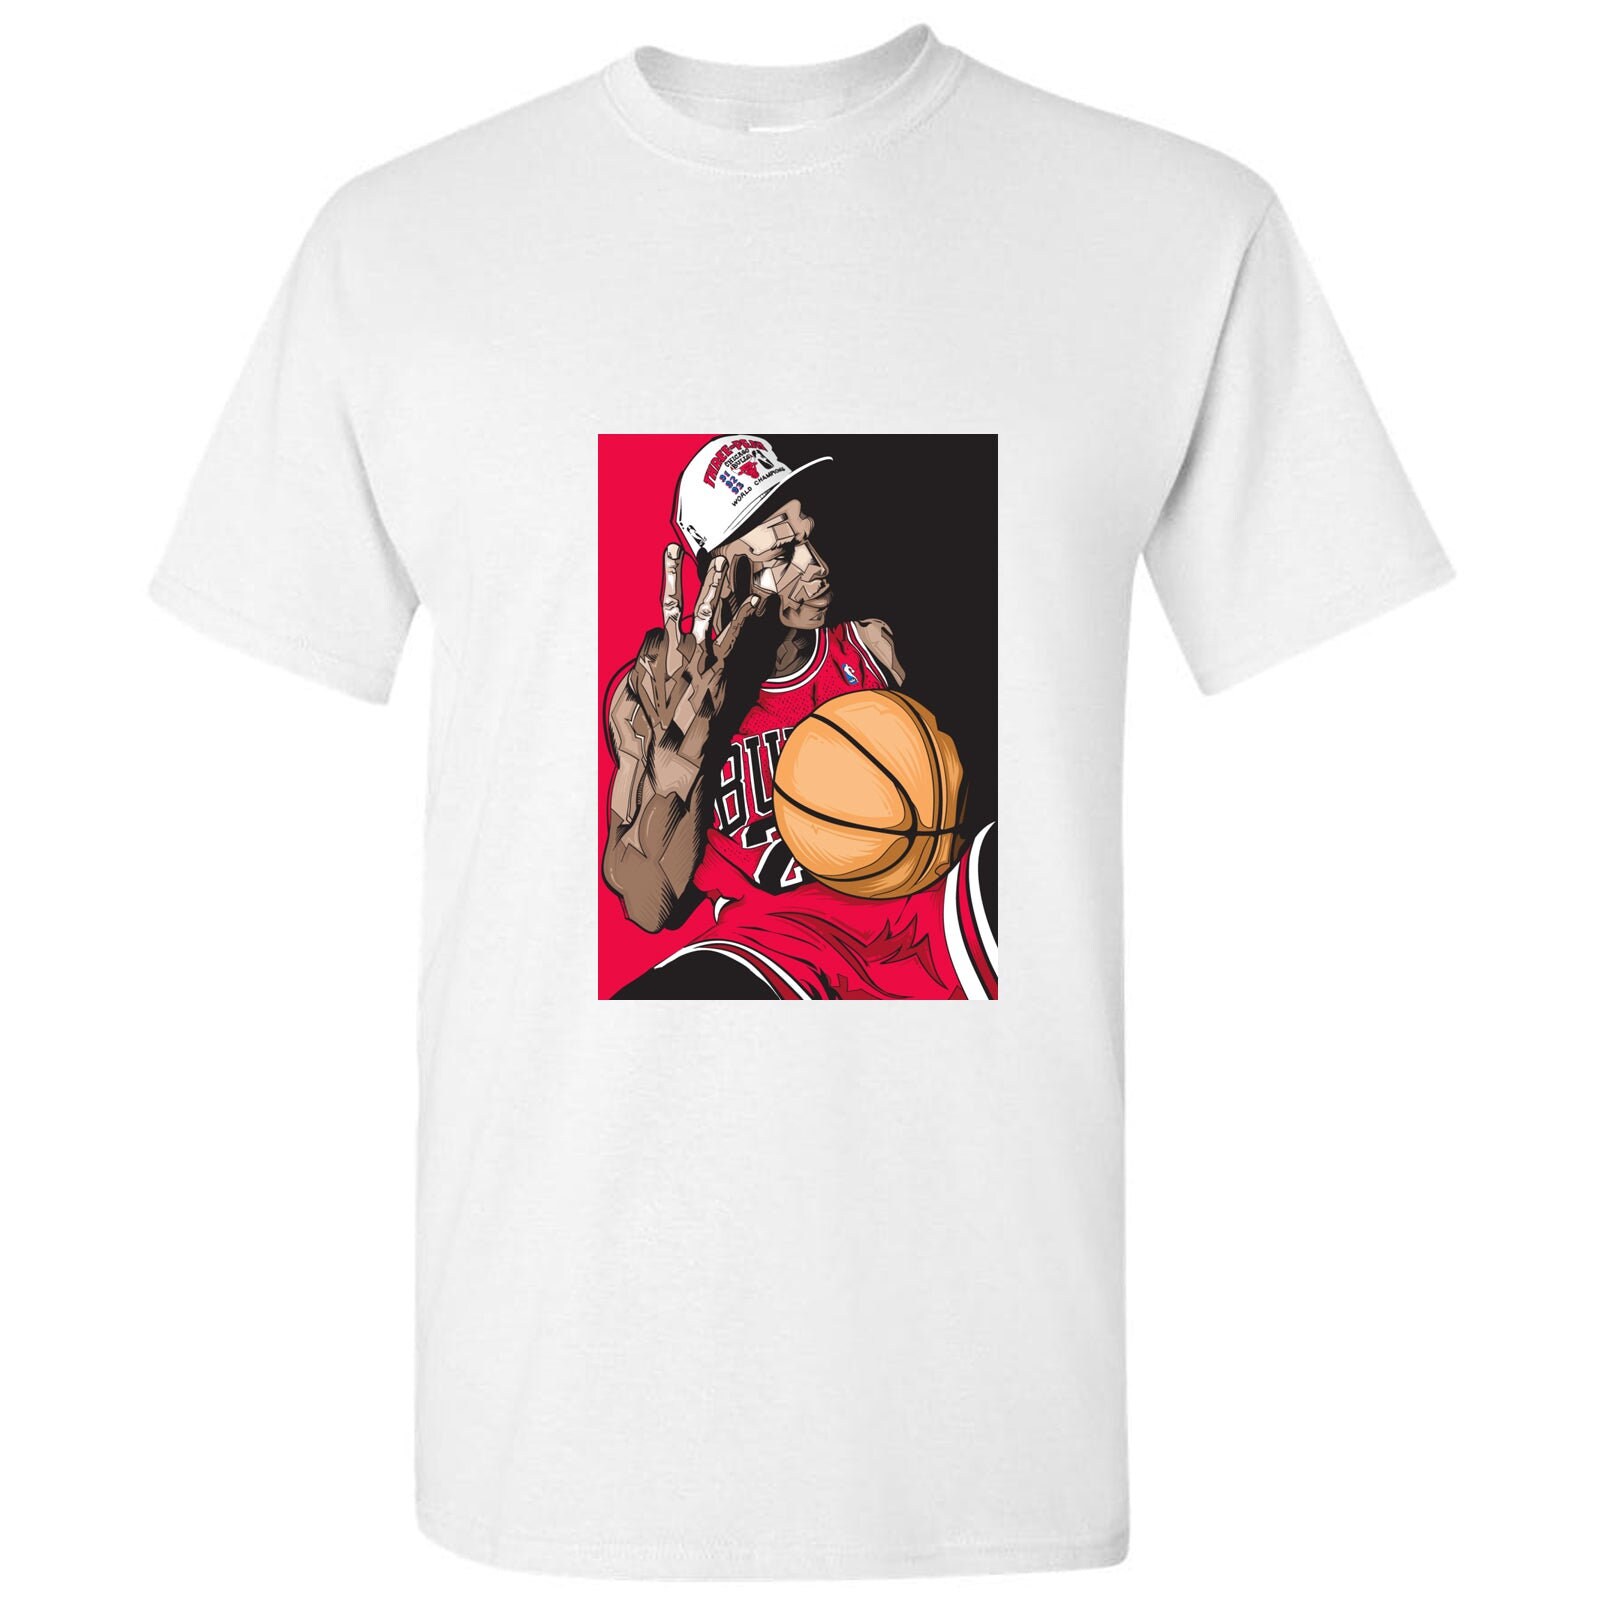 DownSpeak Vintage Wash Michael Jordan T-Shirt, Basketball Shirt, Michael Jordan, Michael Jordan Graphic Tee, Oversized Sport T Shirt